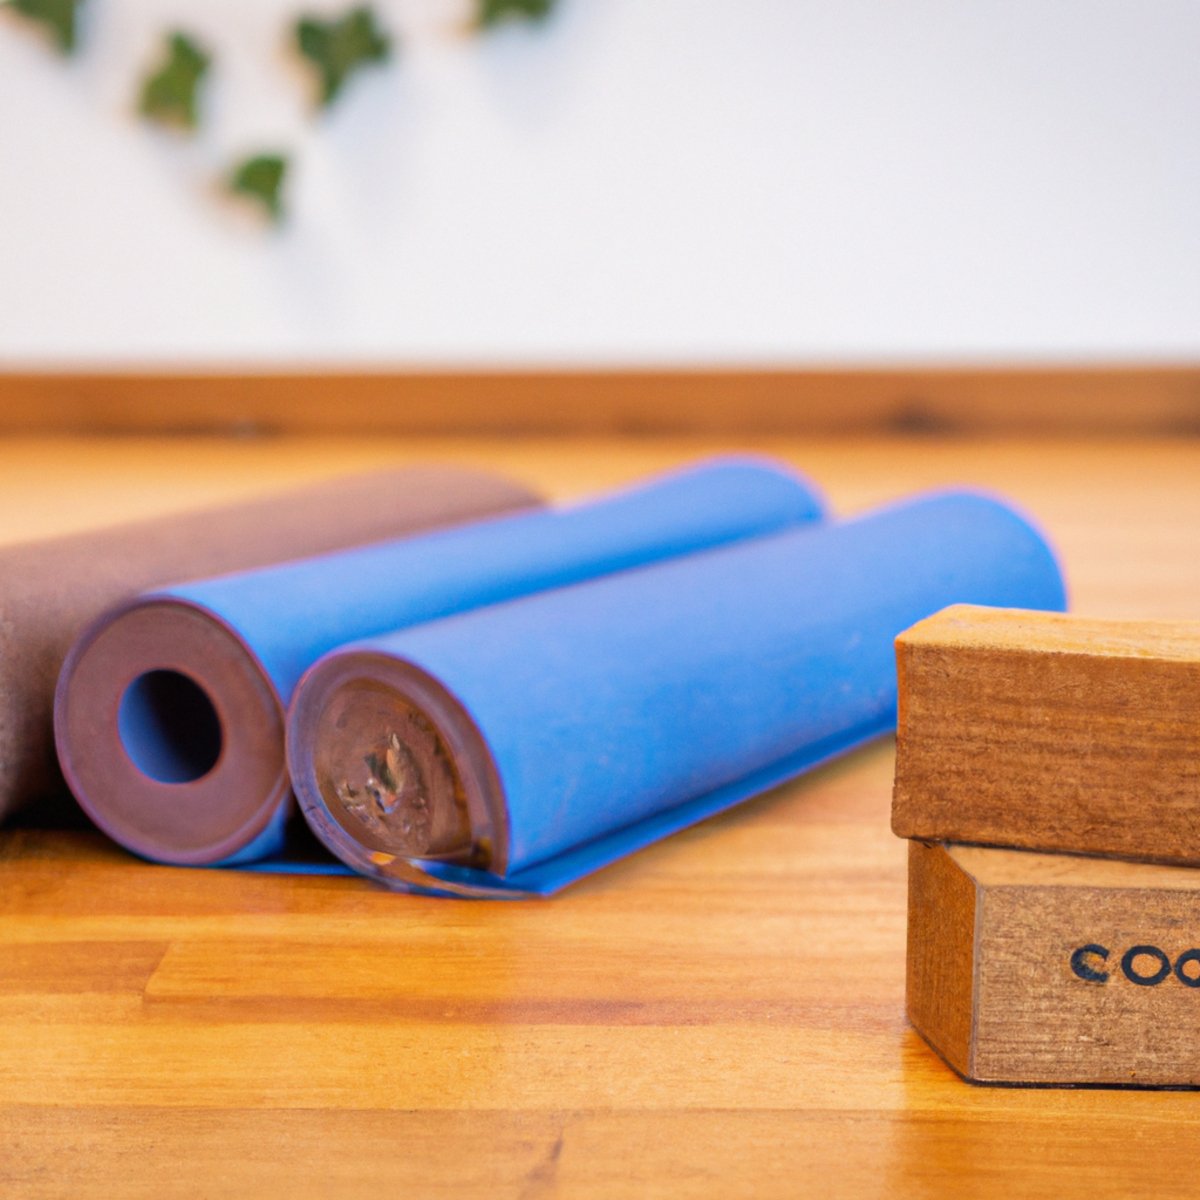 Serene yoga gear on wooden floor: vibrant mat, cork blocks, pastel strap, incense holder, Buddha statue. Natural lighting enhances ambiance.